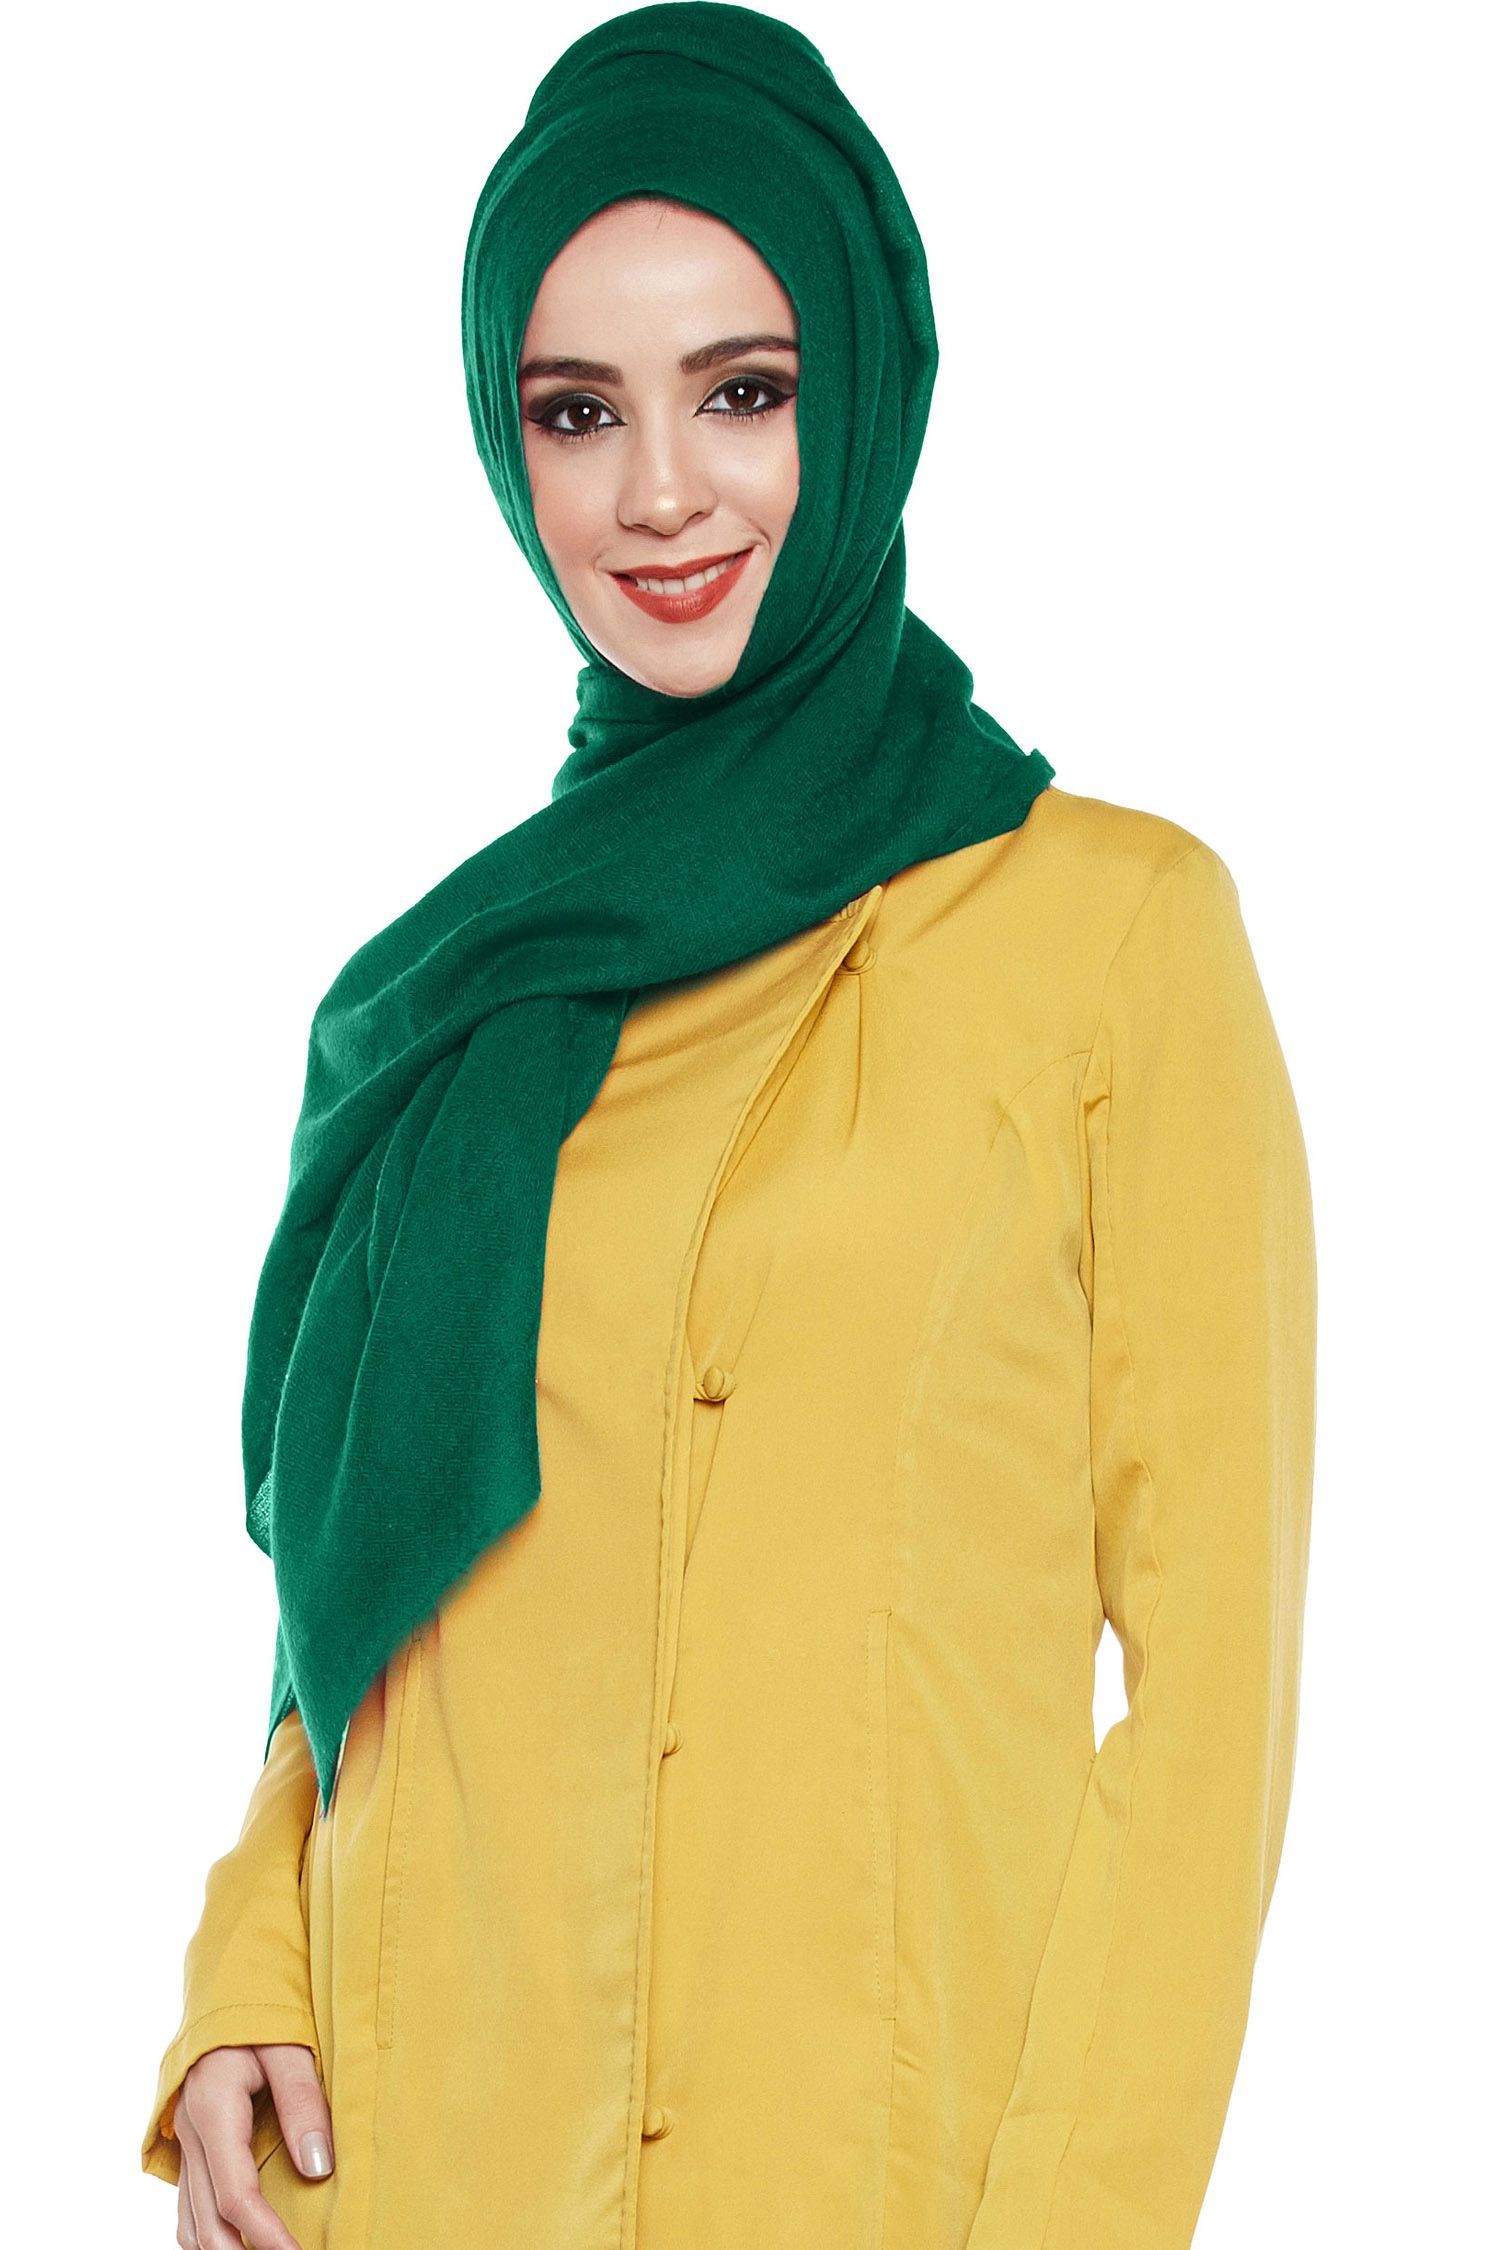 Emerald Green Pashmina Hijab | Handmade Cashmere Head Scarf